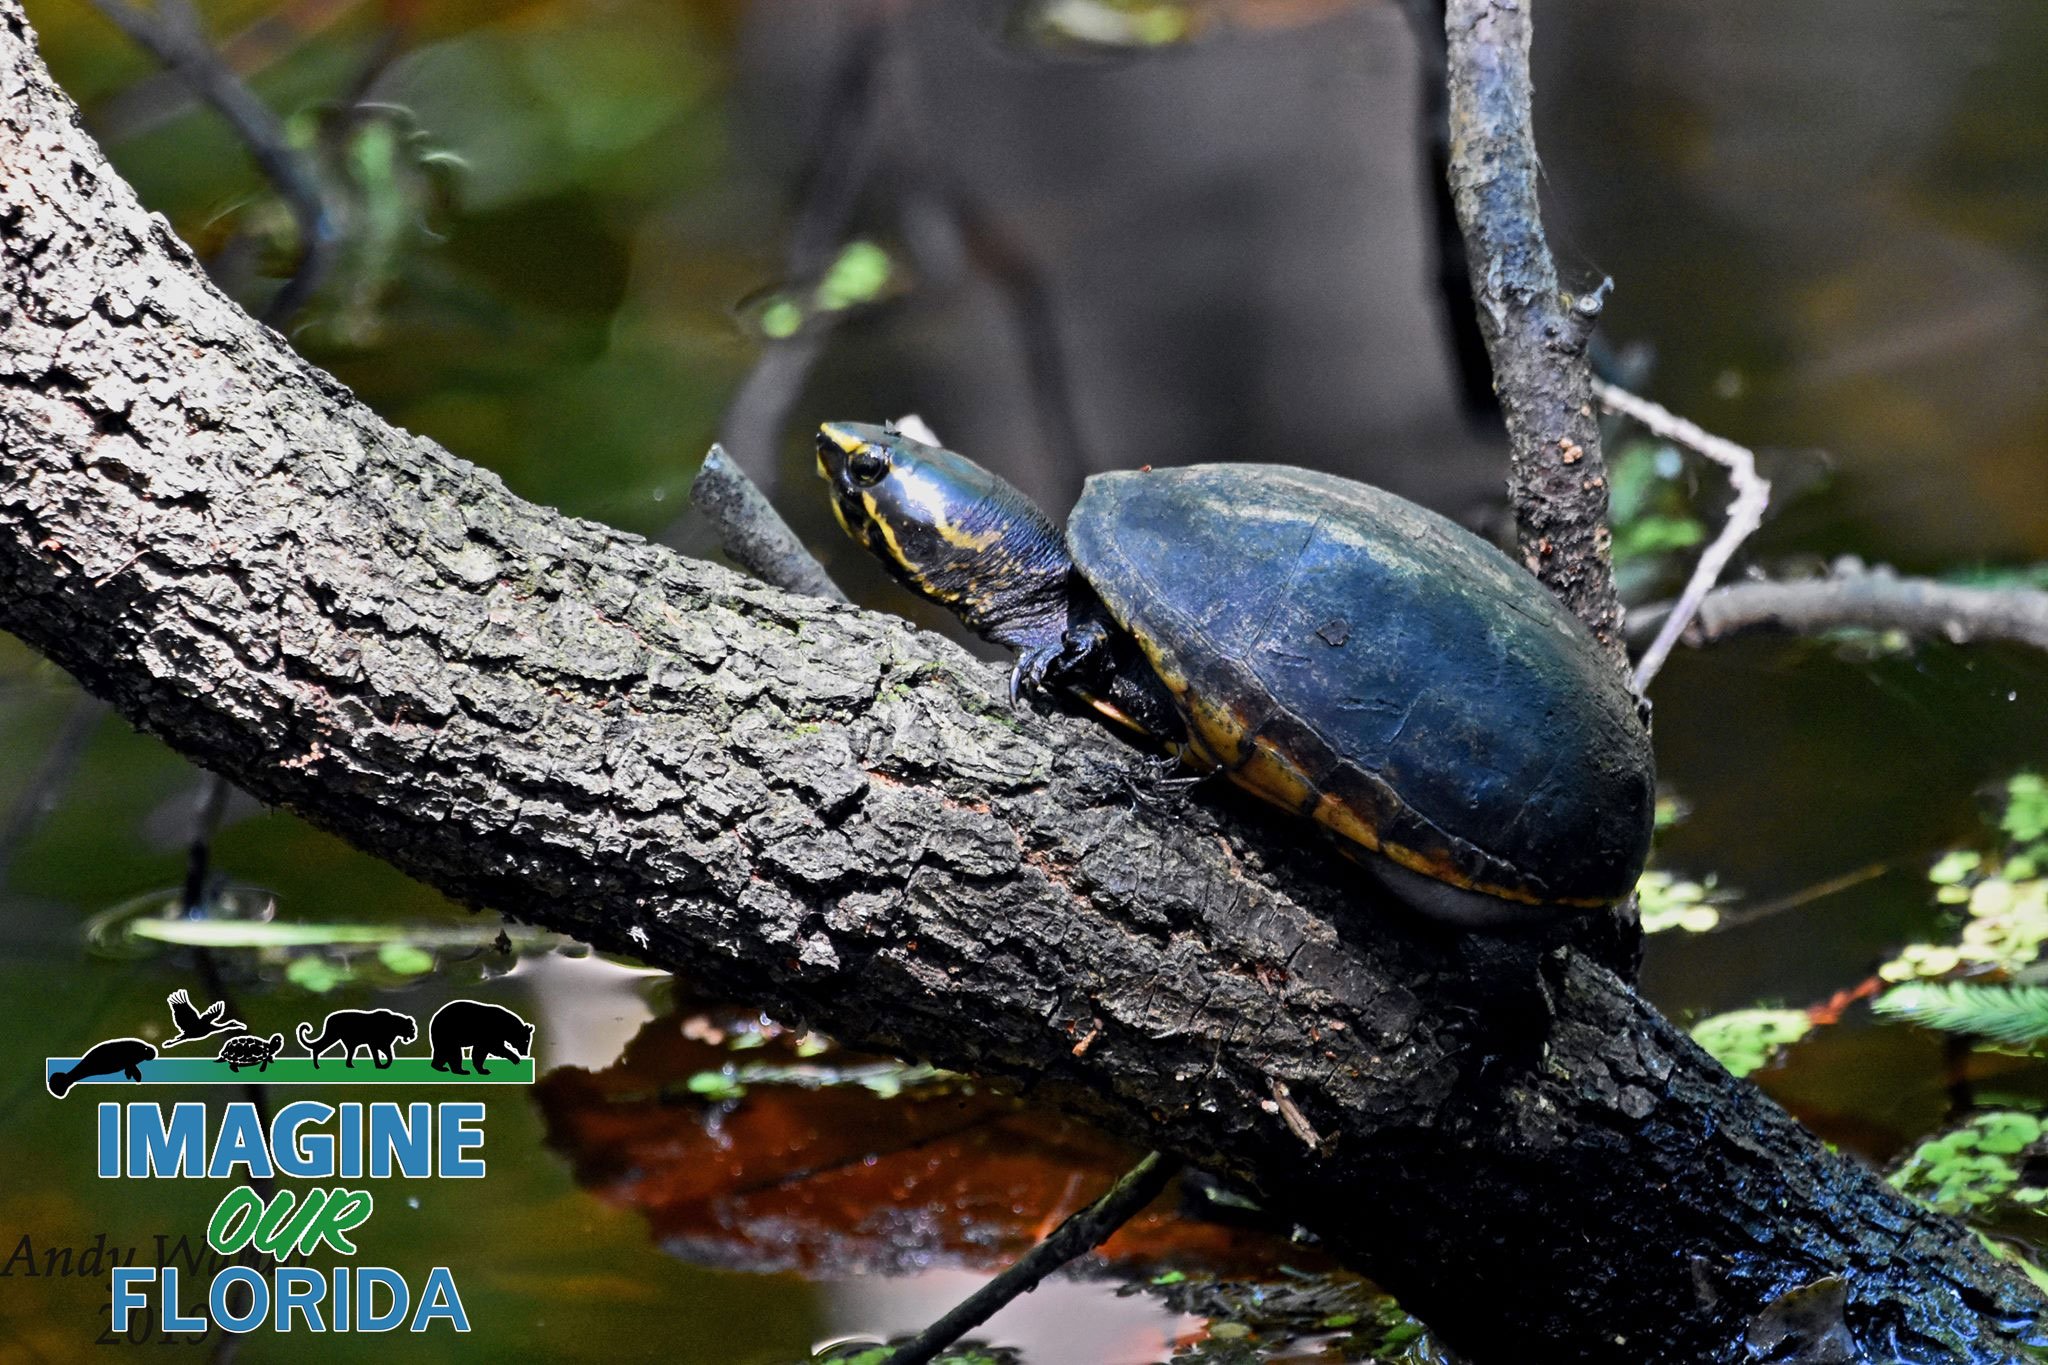 Striped Mud Turtle Imagine Our Florida, Inc